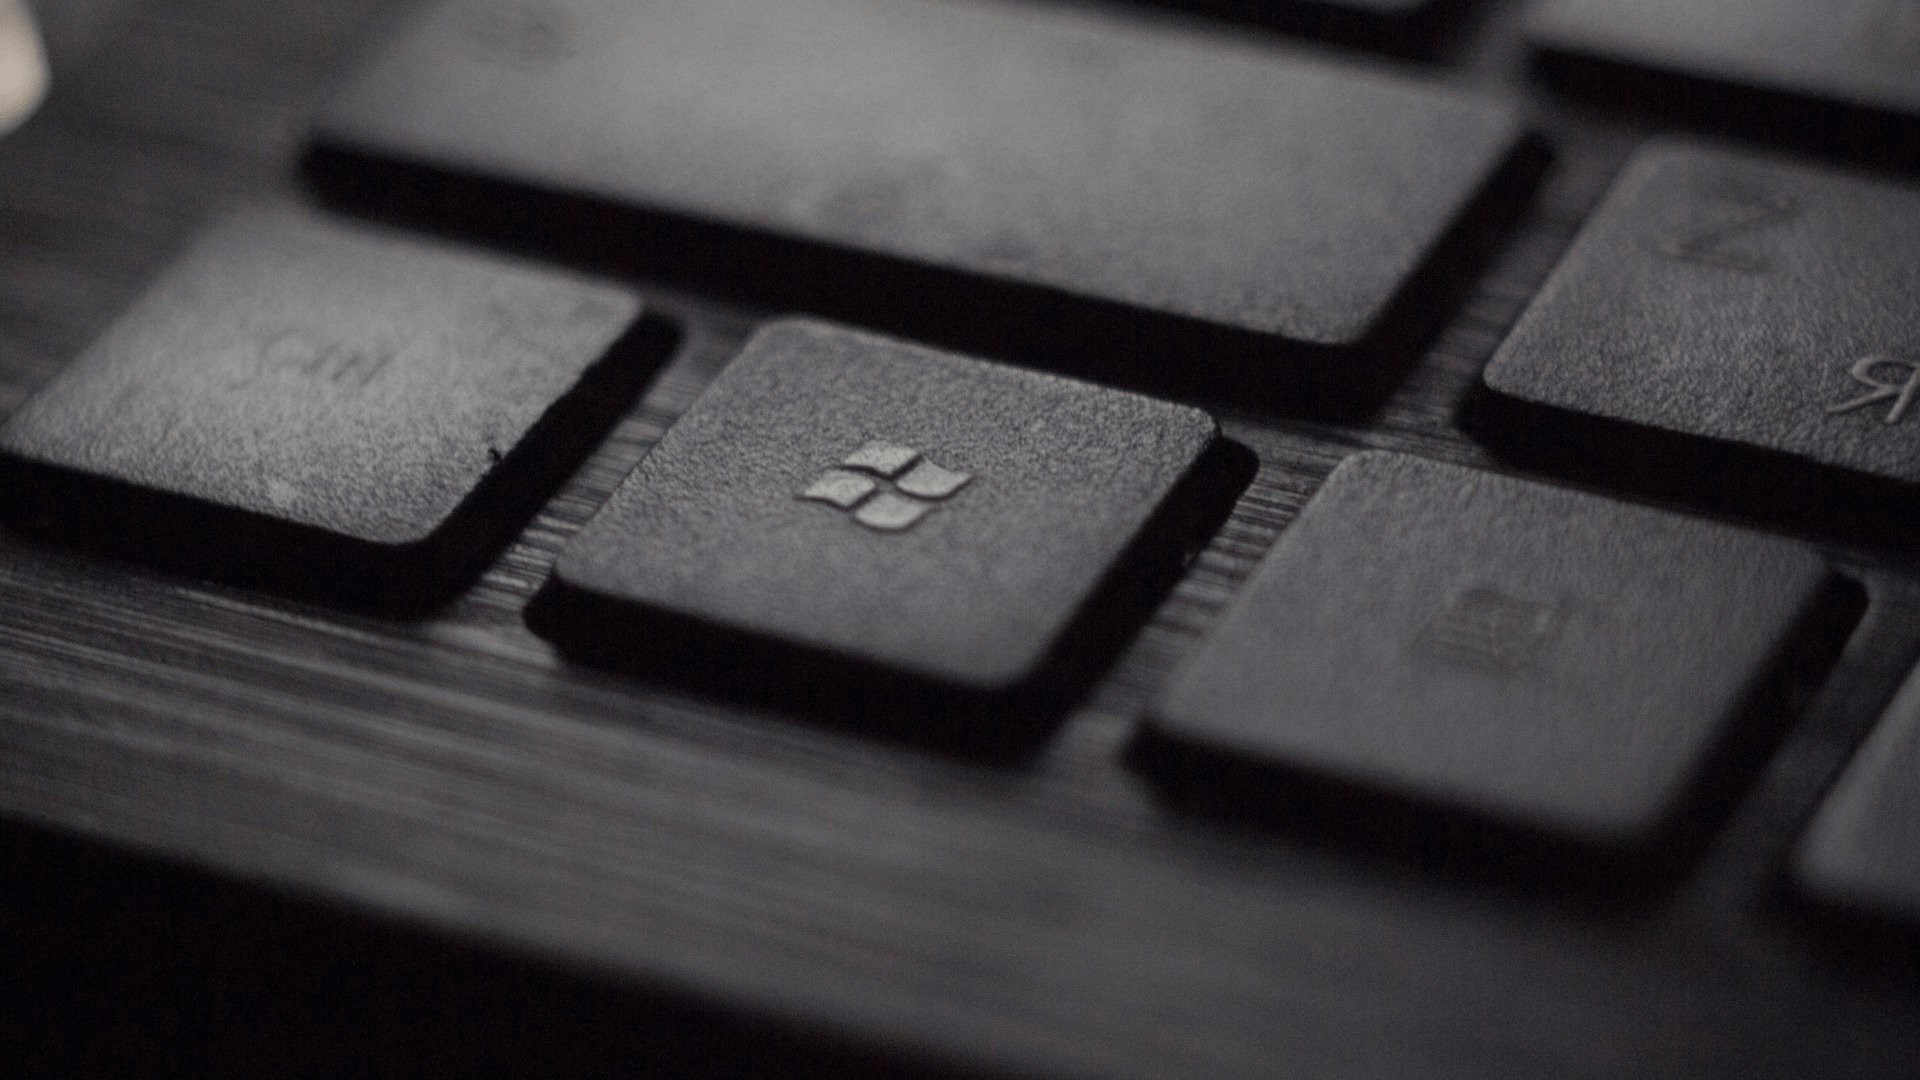 Microsoft's Massive Breach - A Wake-Up Call for Cybersecurity Vigilance